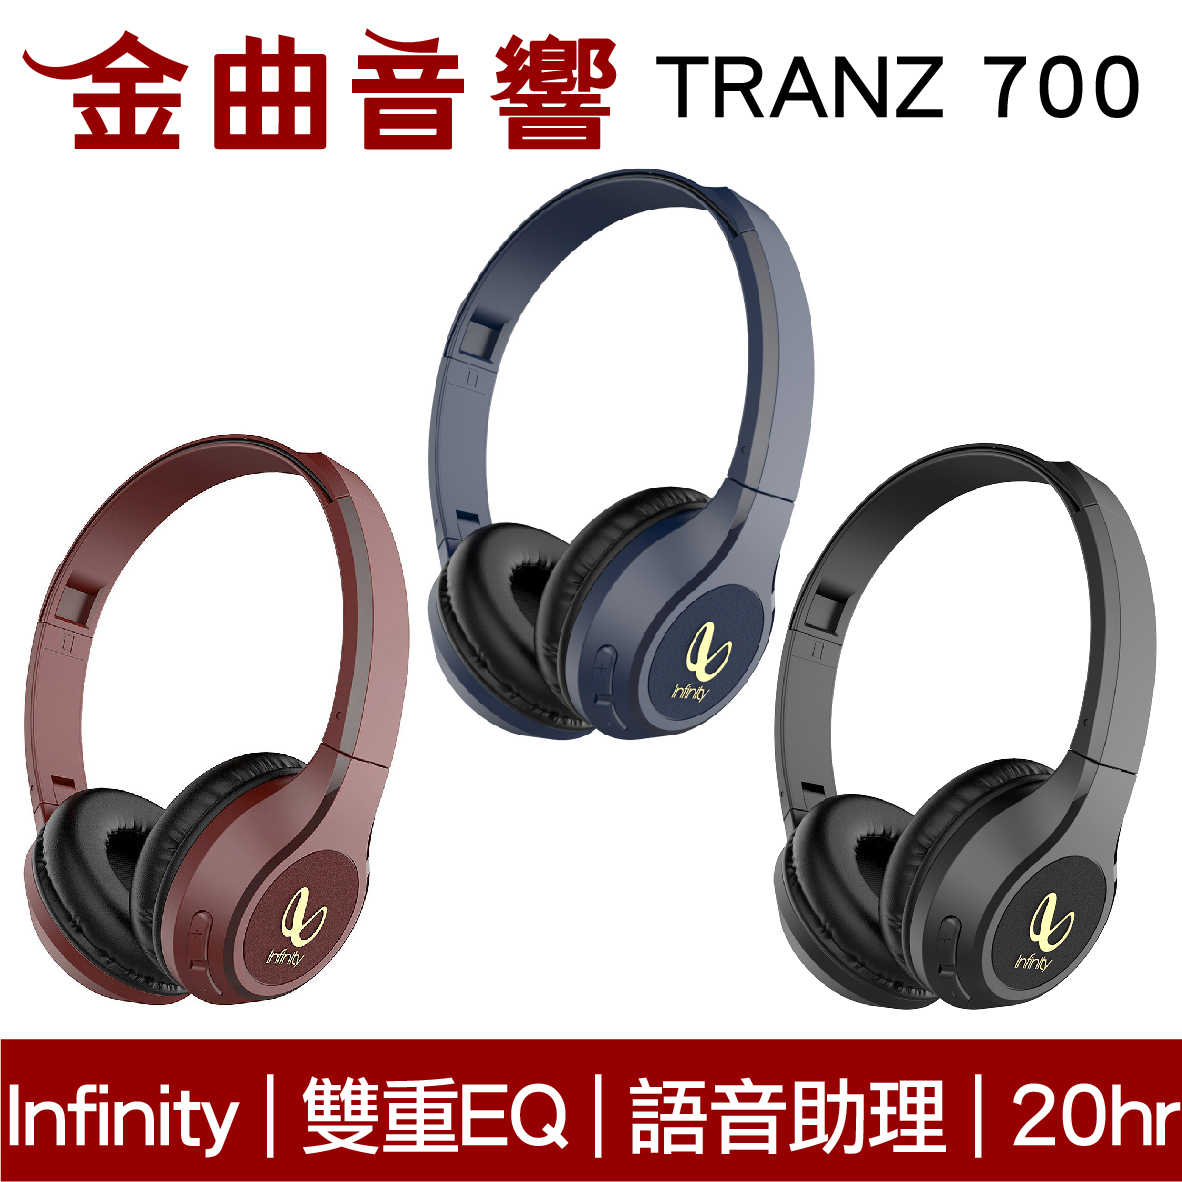 Infinity TRANZ 700 雙重EQ 20hr續航 免持通話 耳罩式 藍牙耳機 | 金曲音響